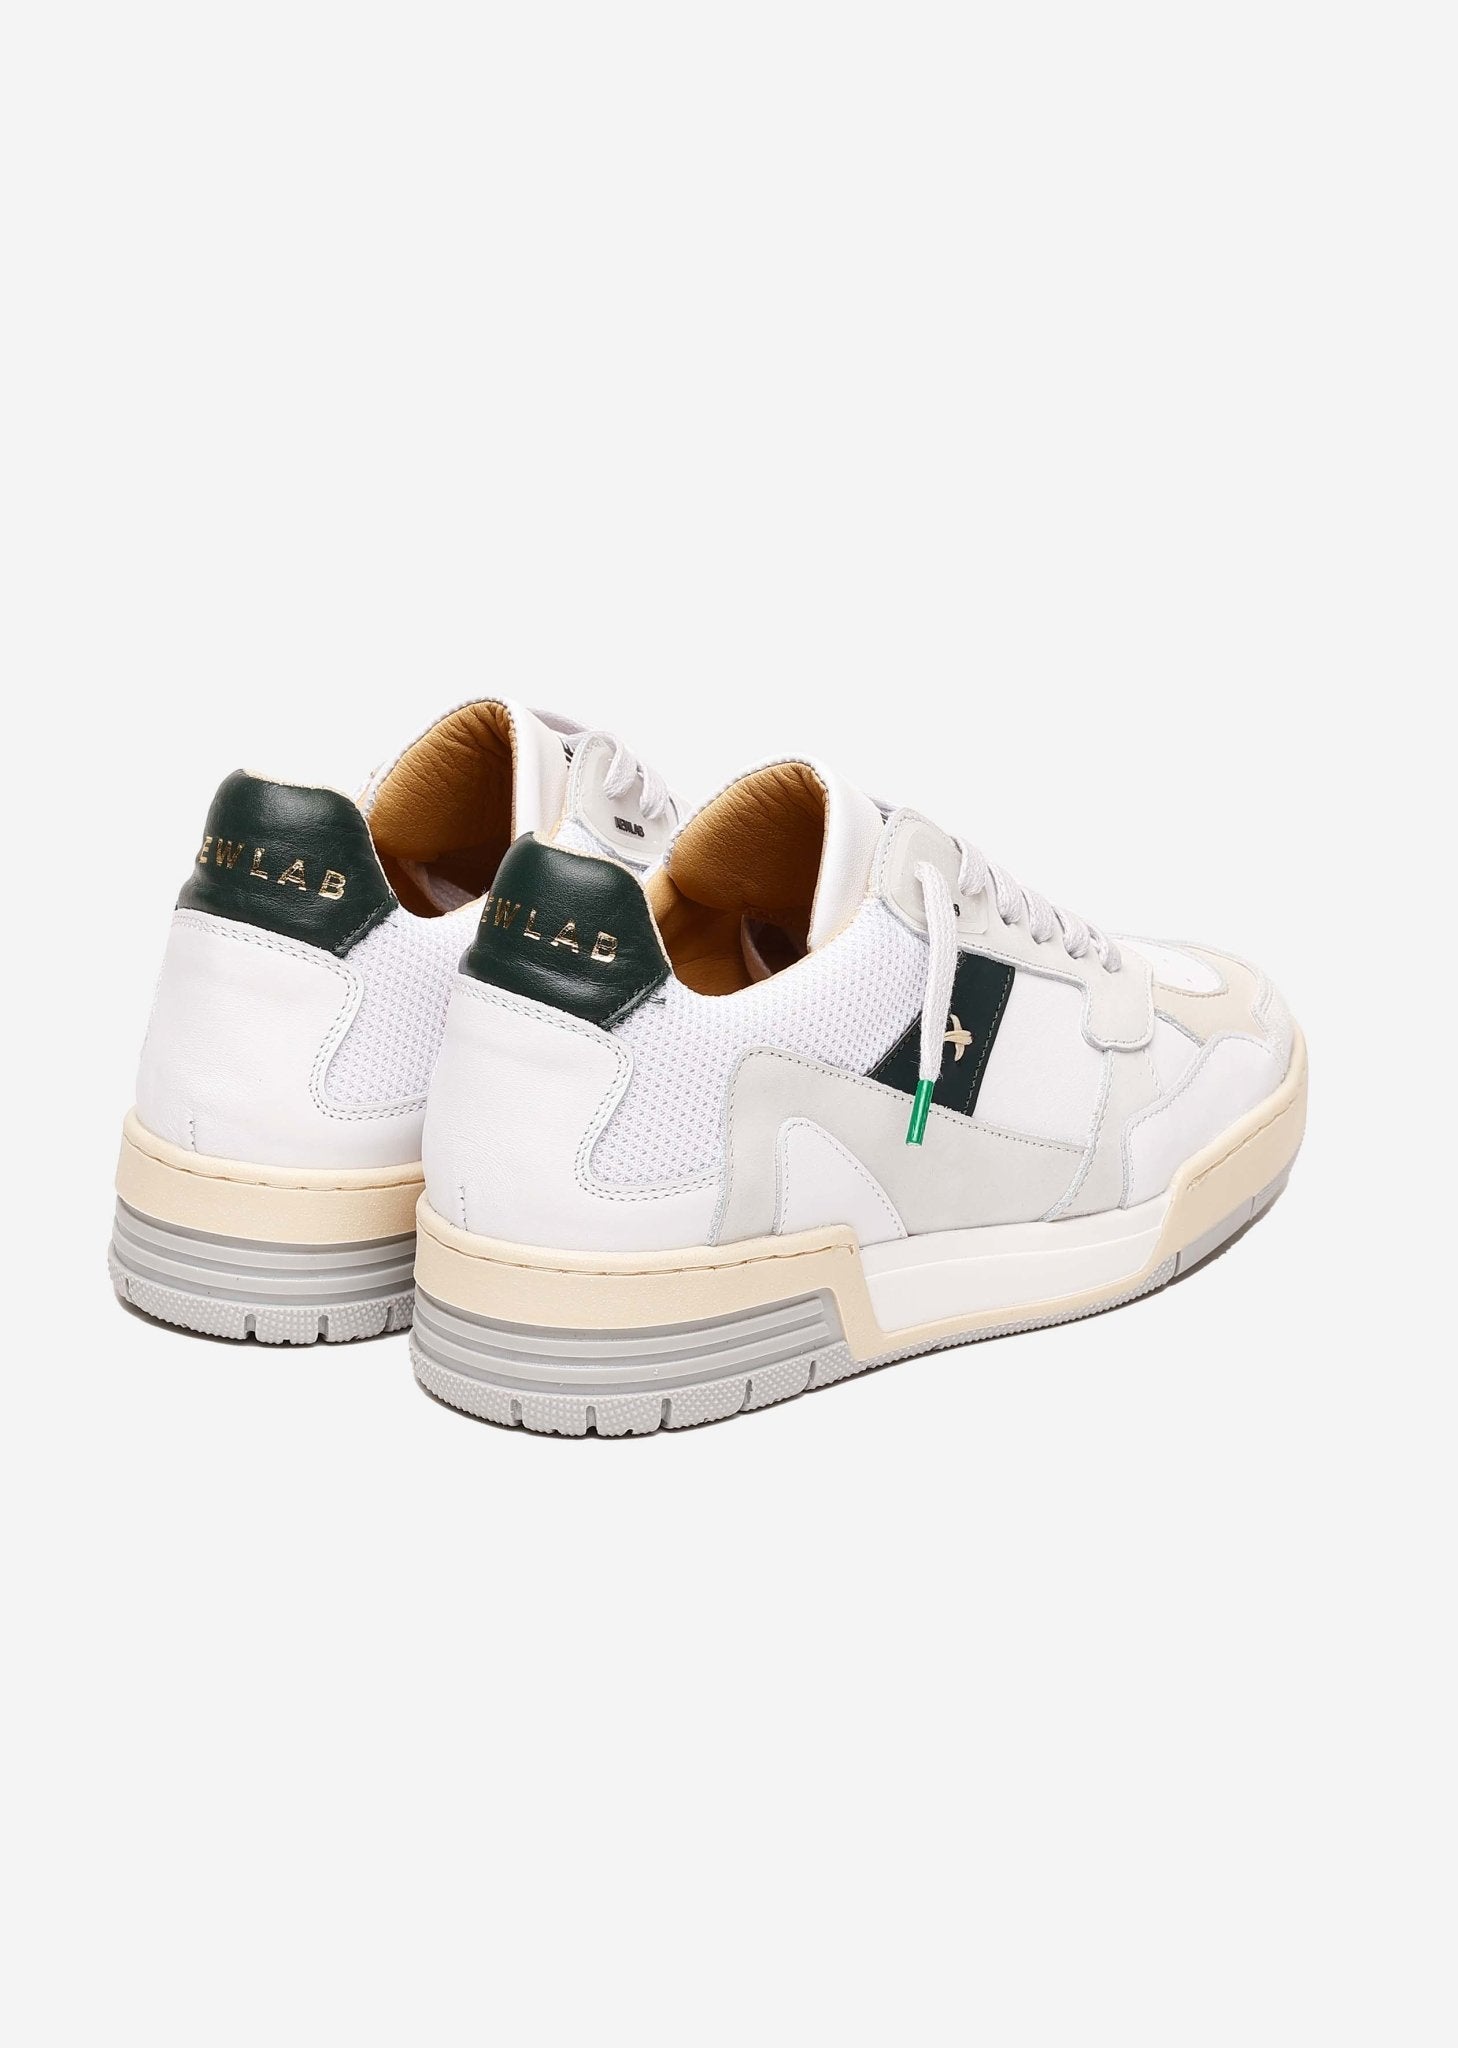 BASKET White/Green - NEWLAB - Chaussures - NEWLAB